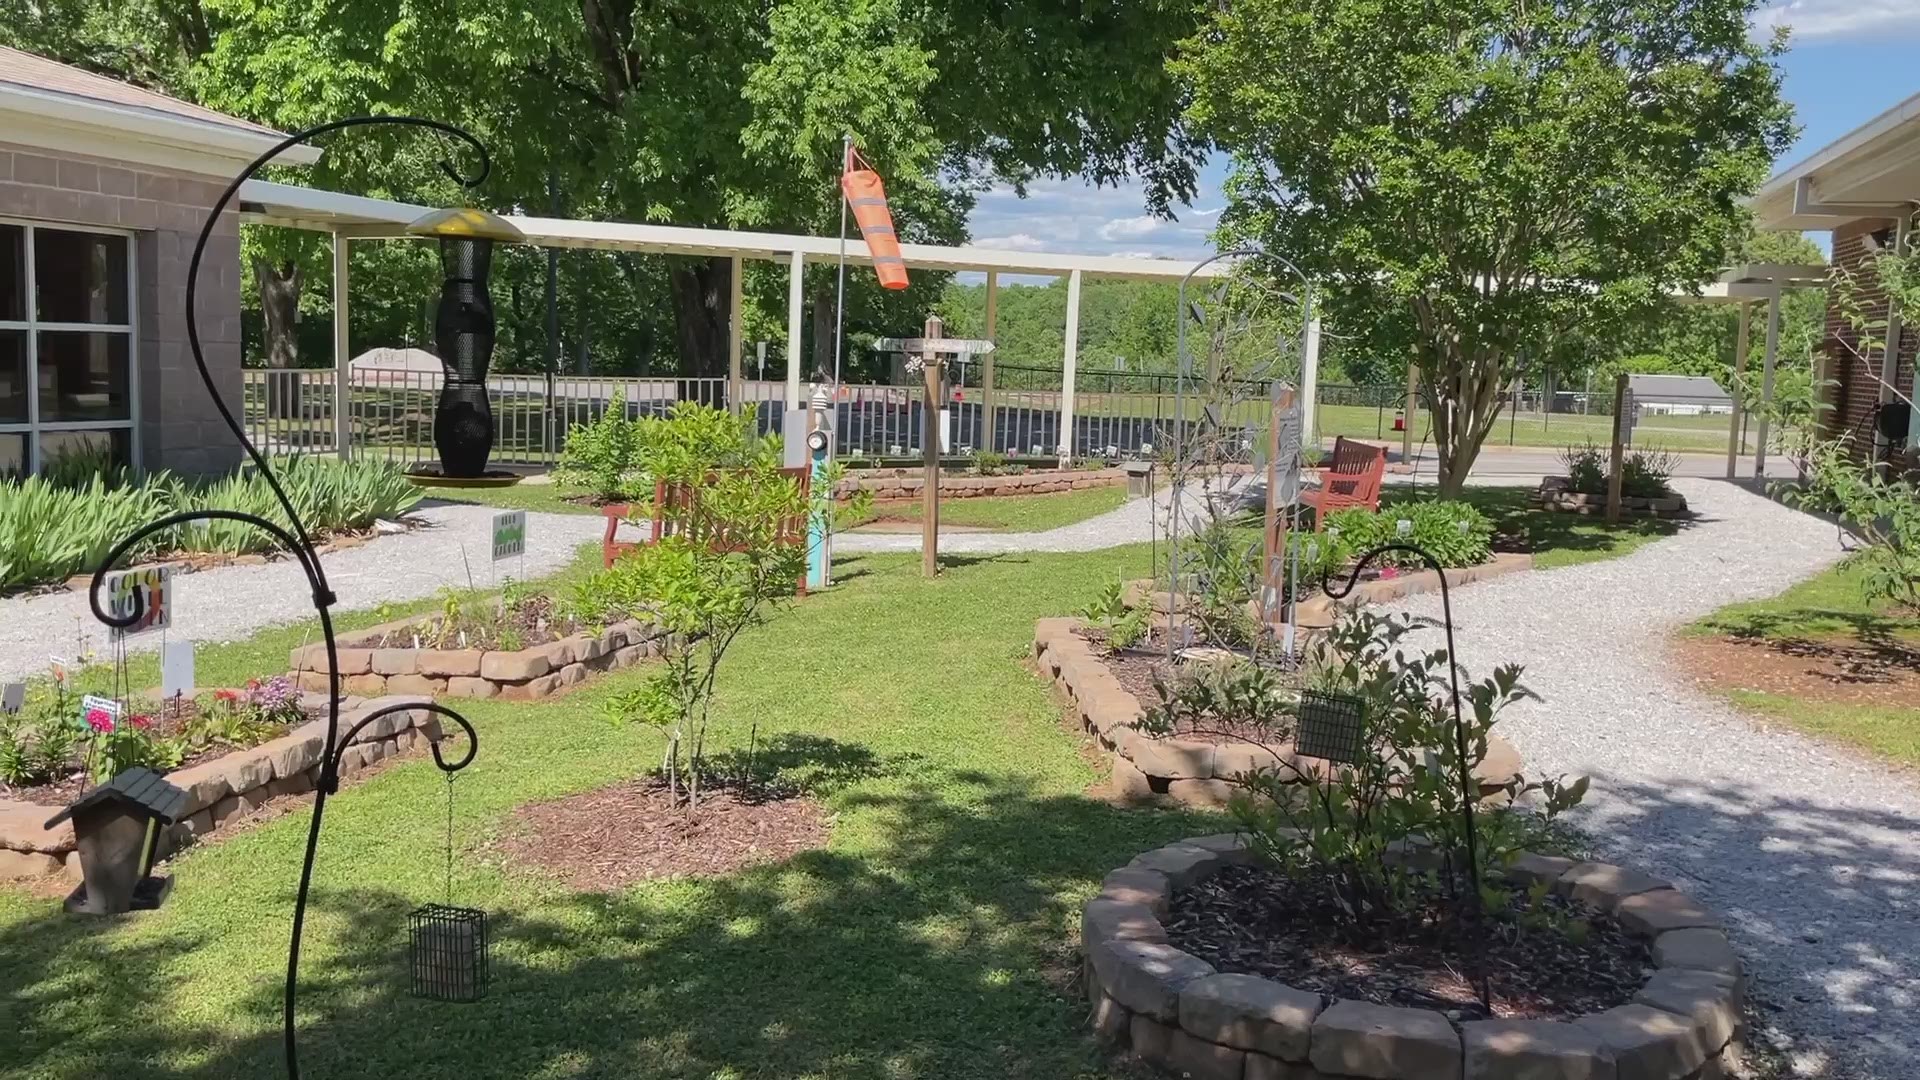 Riverton Elementary School's Outdoor Classroom features gardens, bird feeders, and even a tortoise.